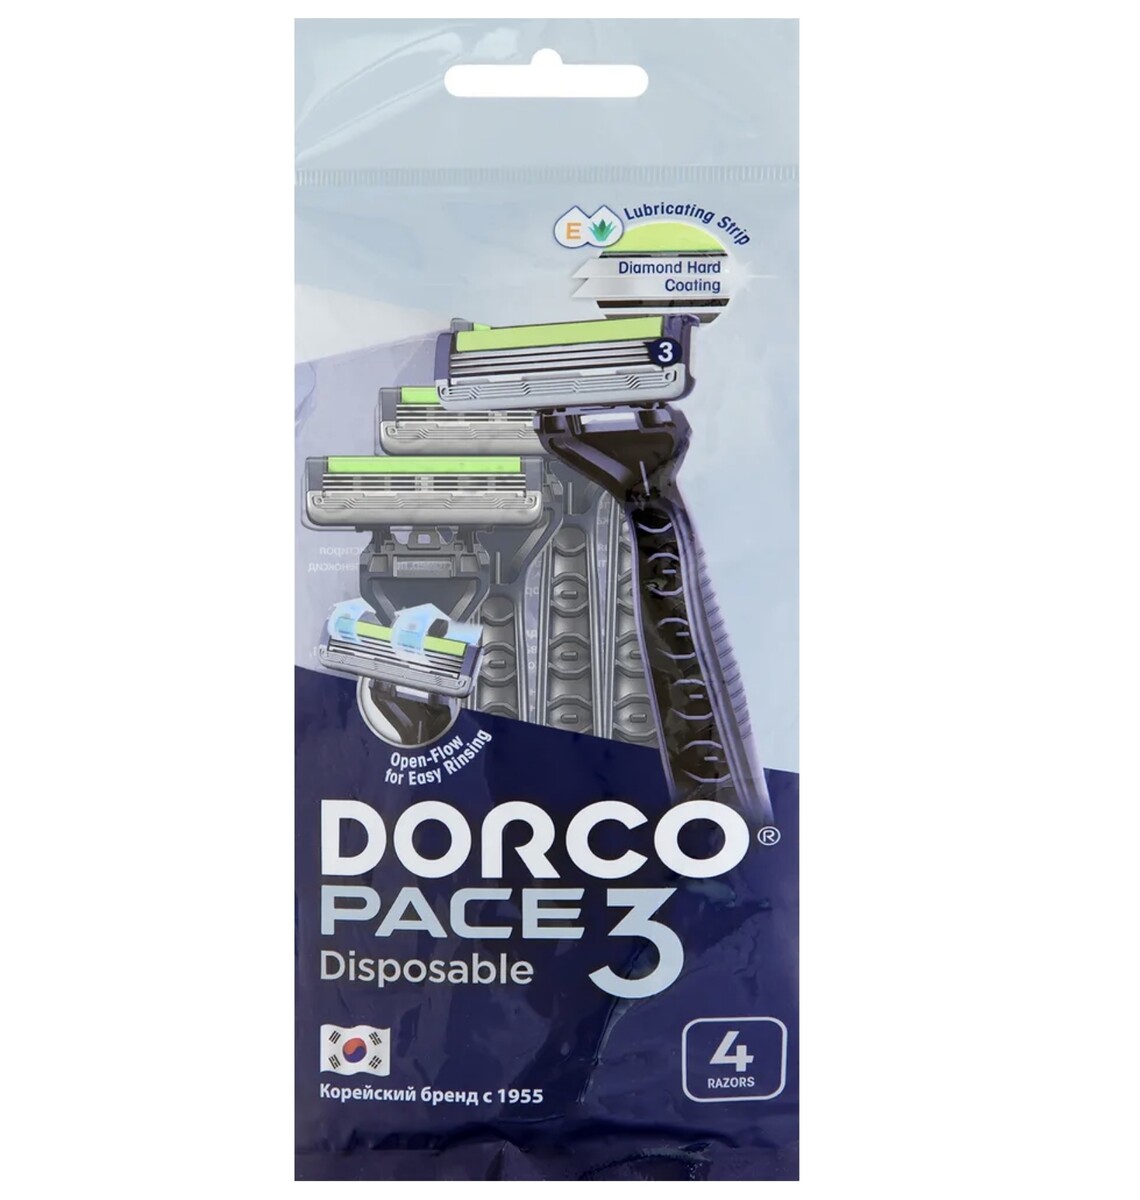 Dorco pace3 однораз.станок 4шт. плав.голв, с 3лезвиями увл.полоса new (ю.корея) dorco pace6 станок 2 s система с 6лезвиями ю корея